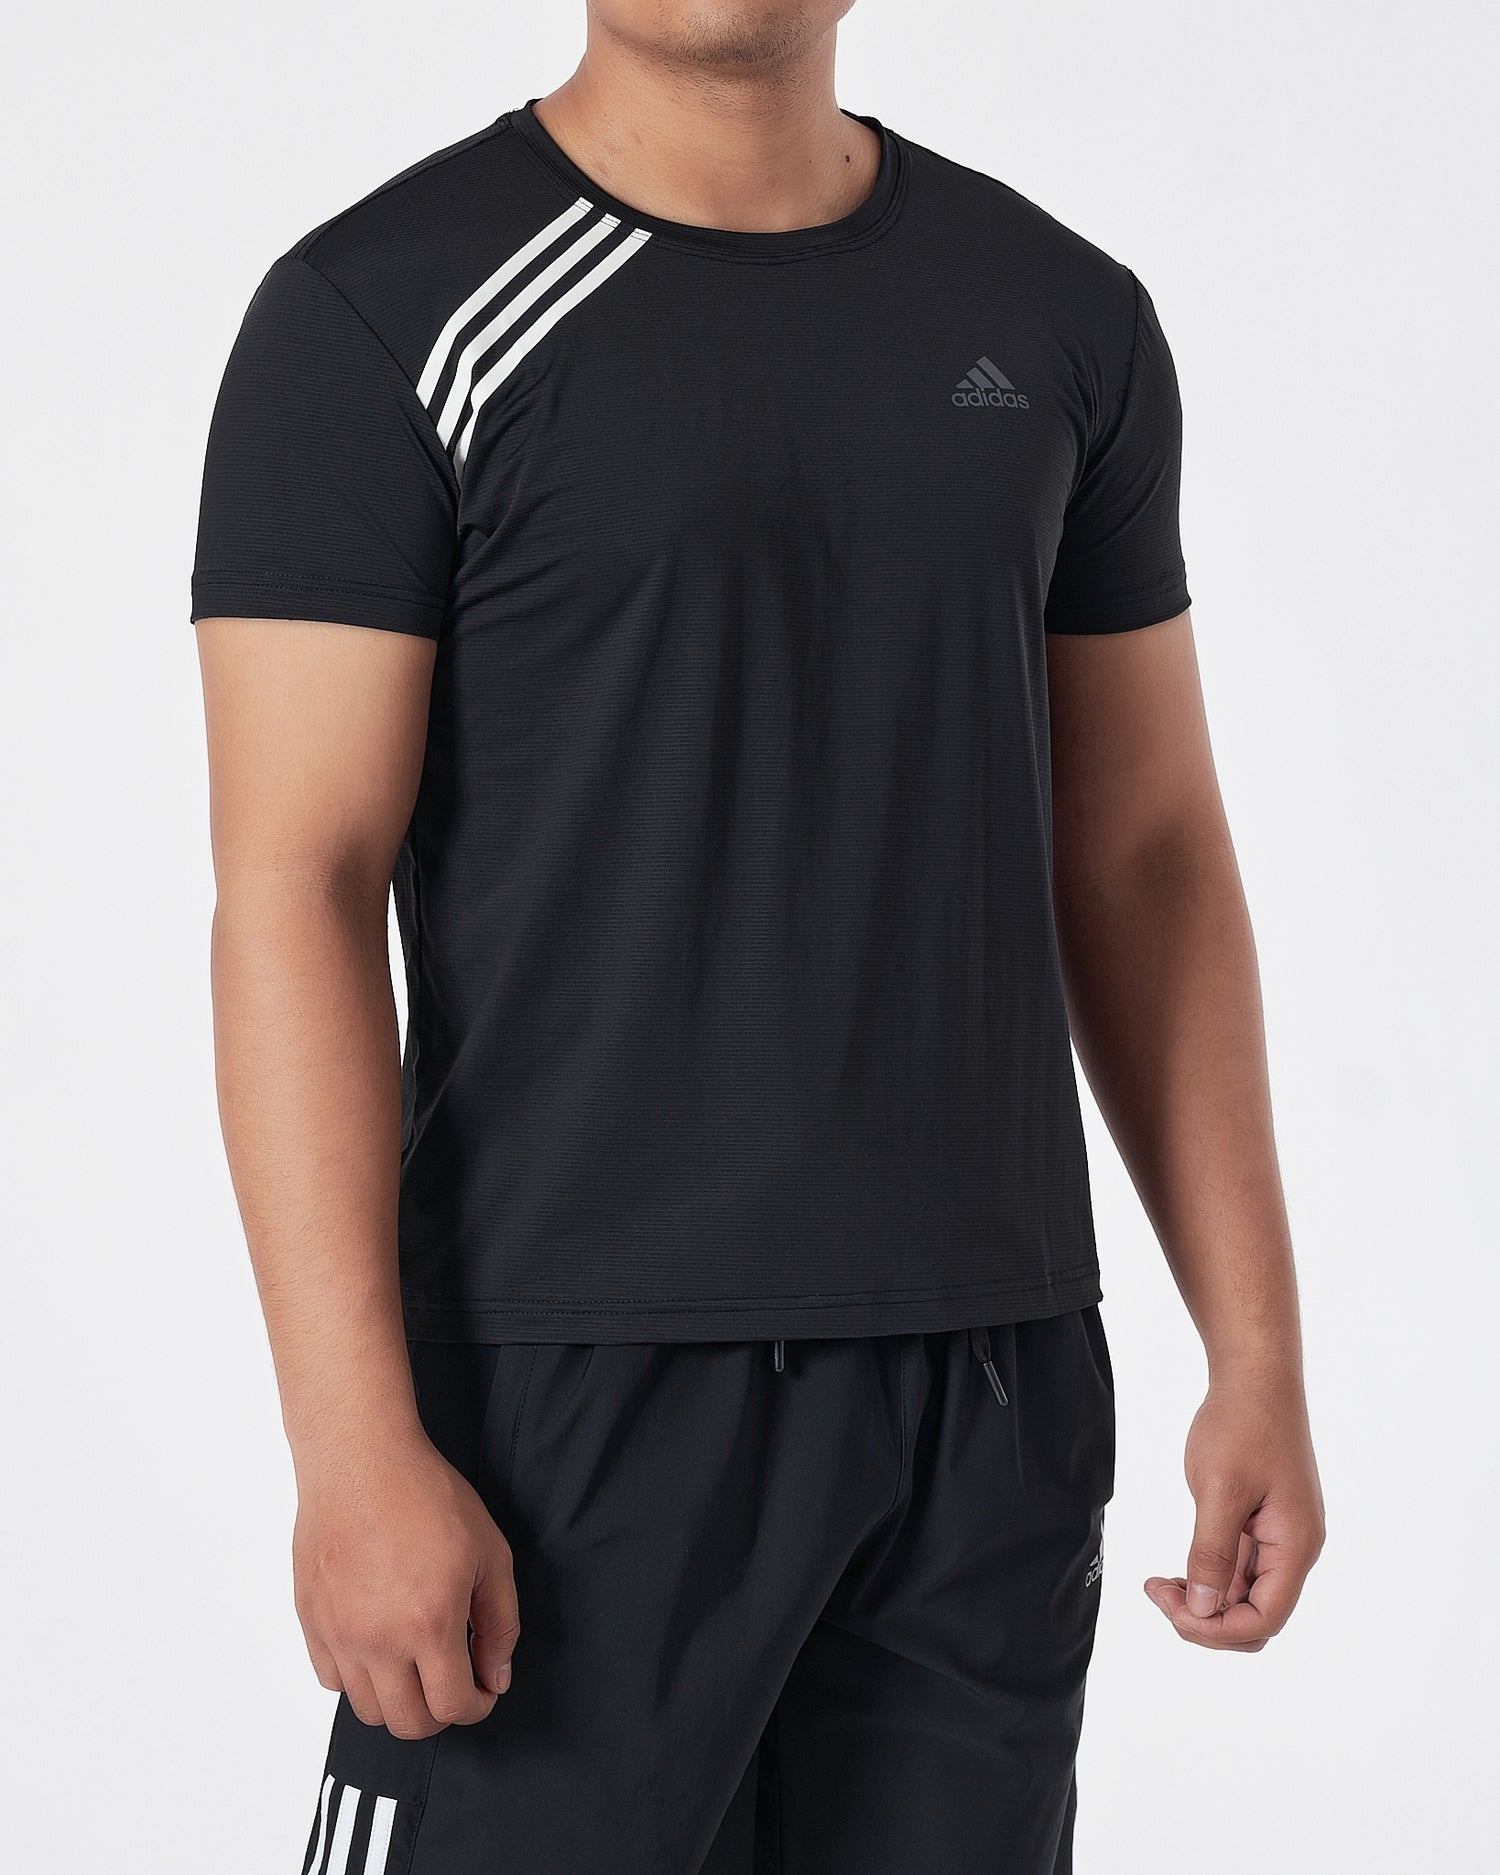 ADI Shoulder Striped Men Black Sport T-Shirt 14.50